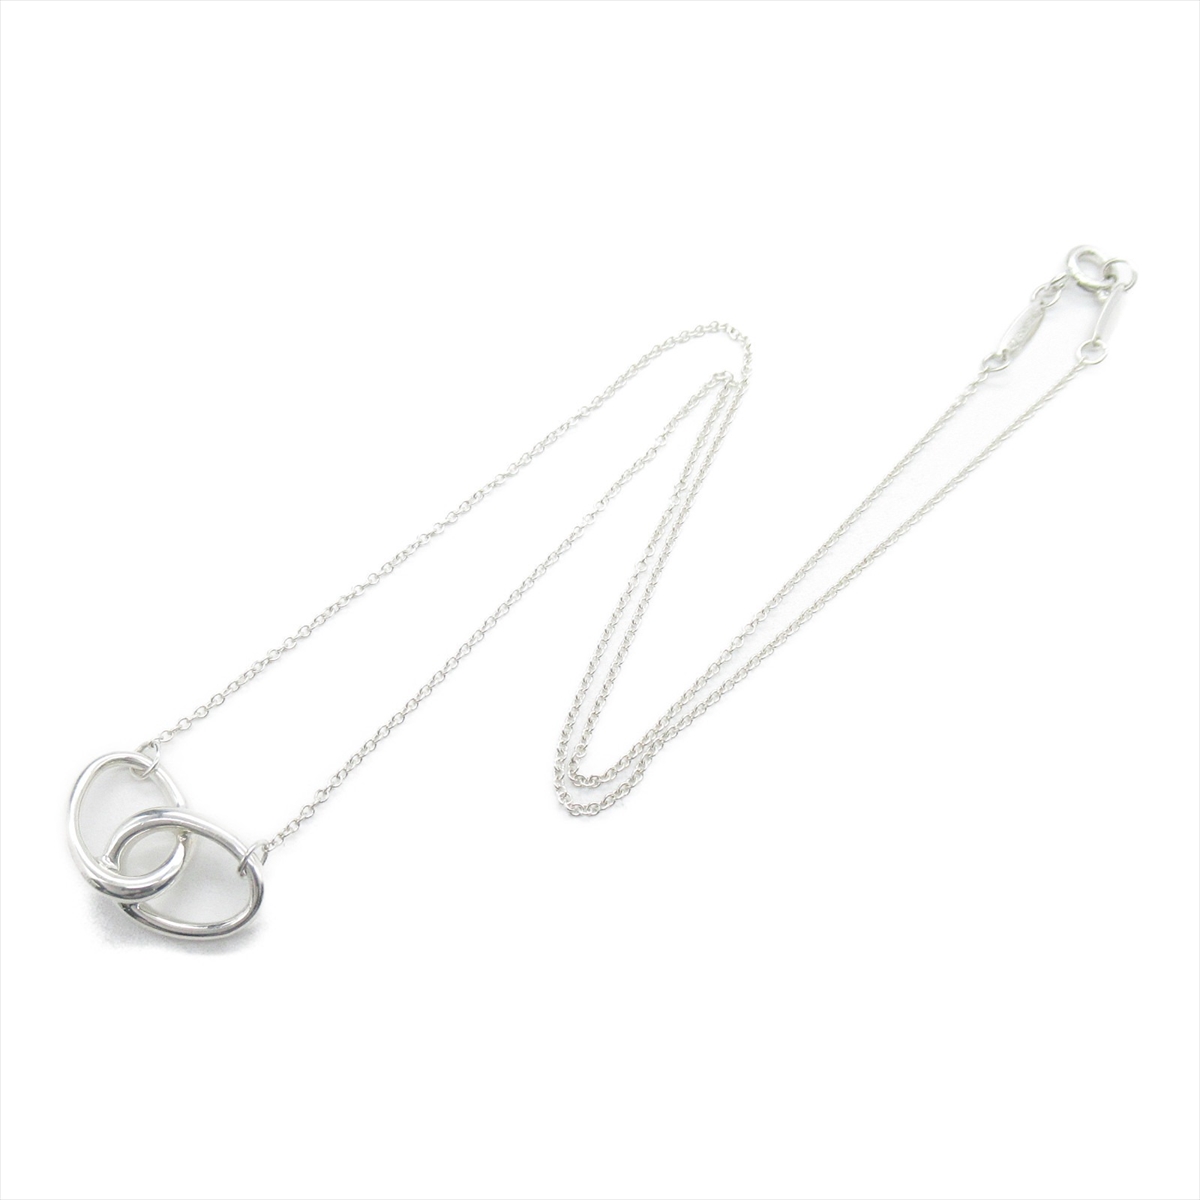 中古Tiffany & Co.蒂芙尼A级95新经典double loop necklace项链